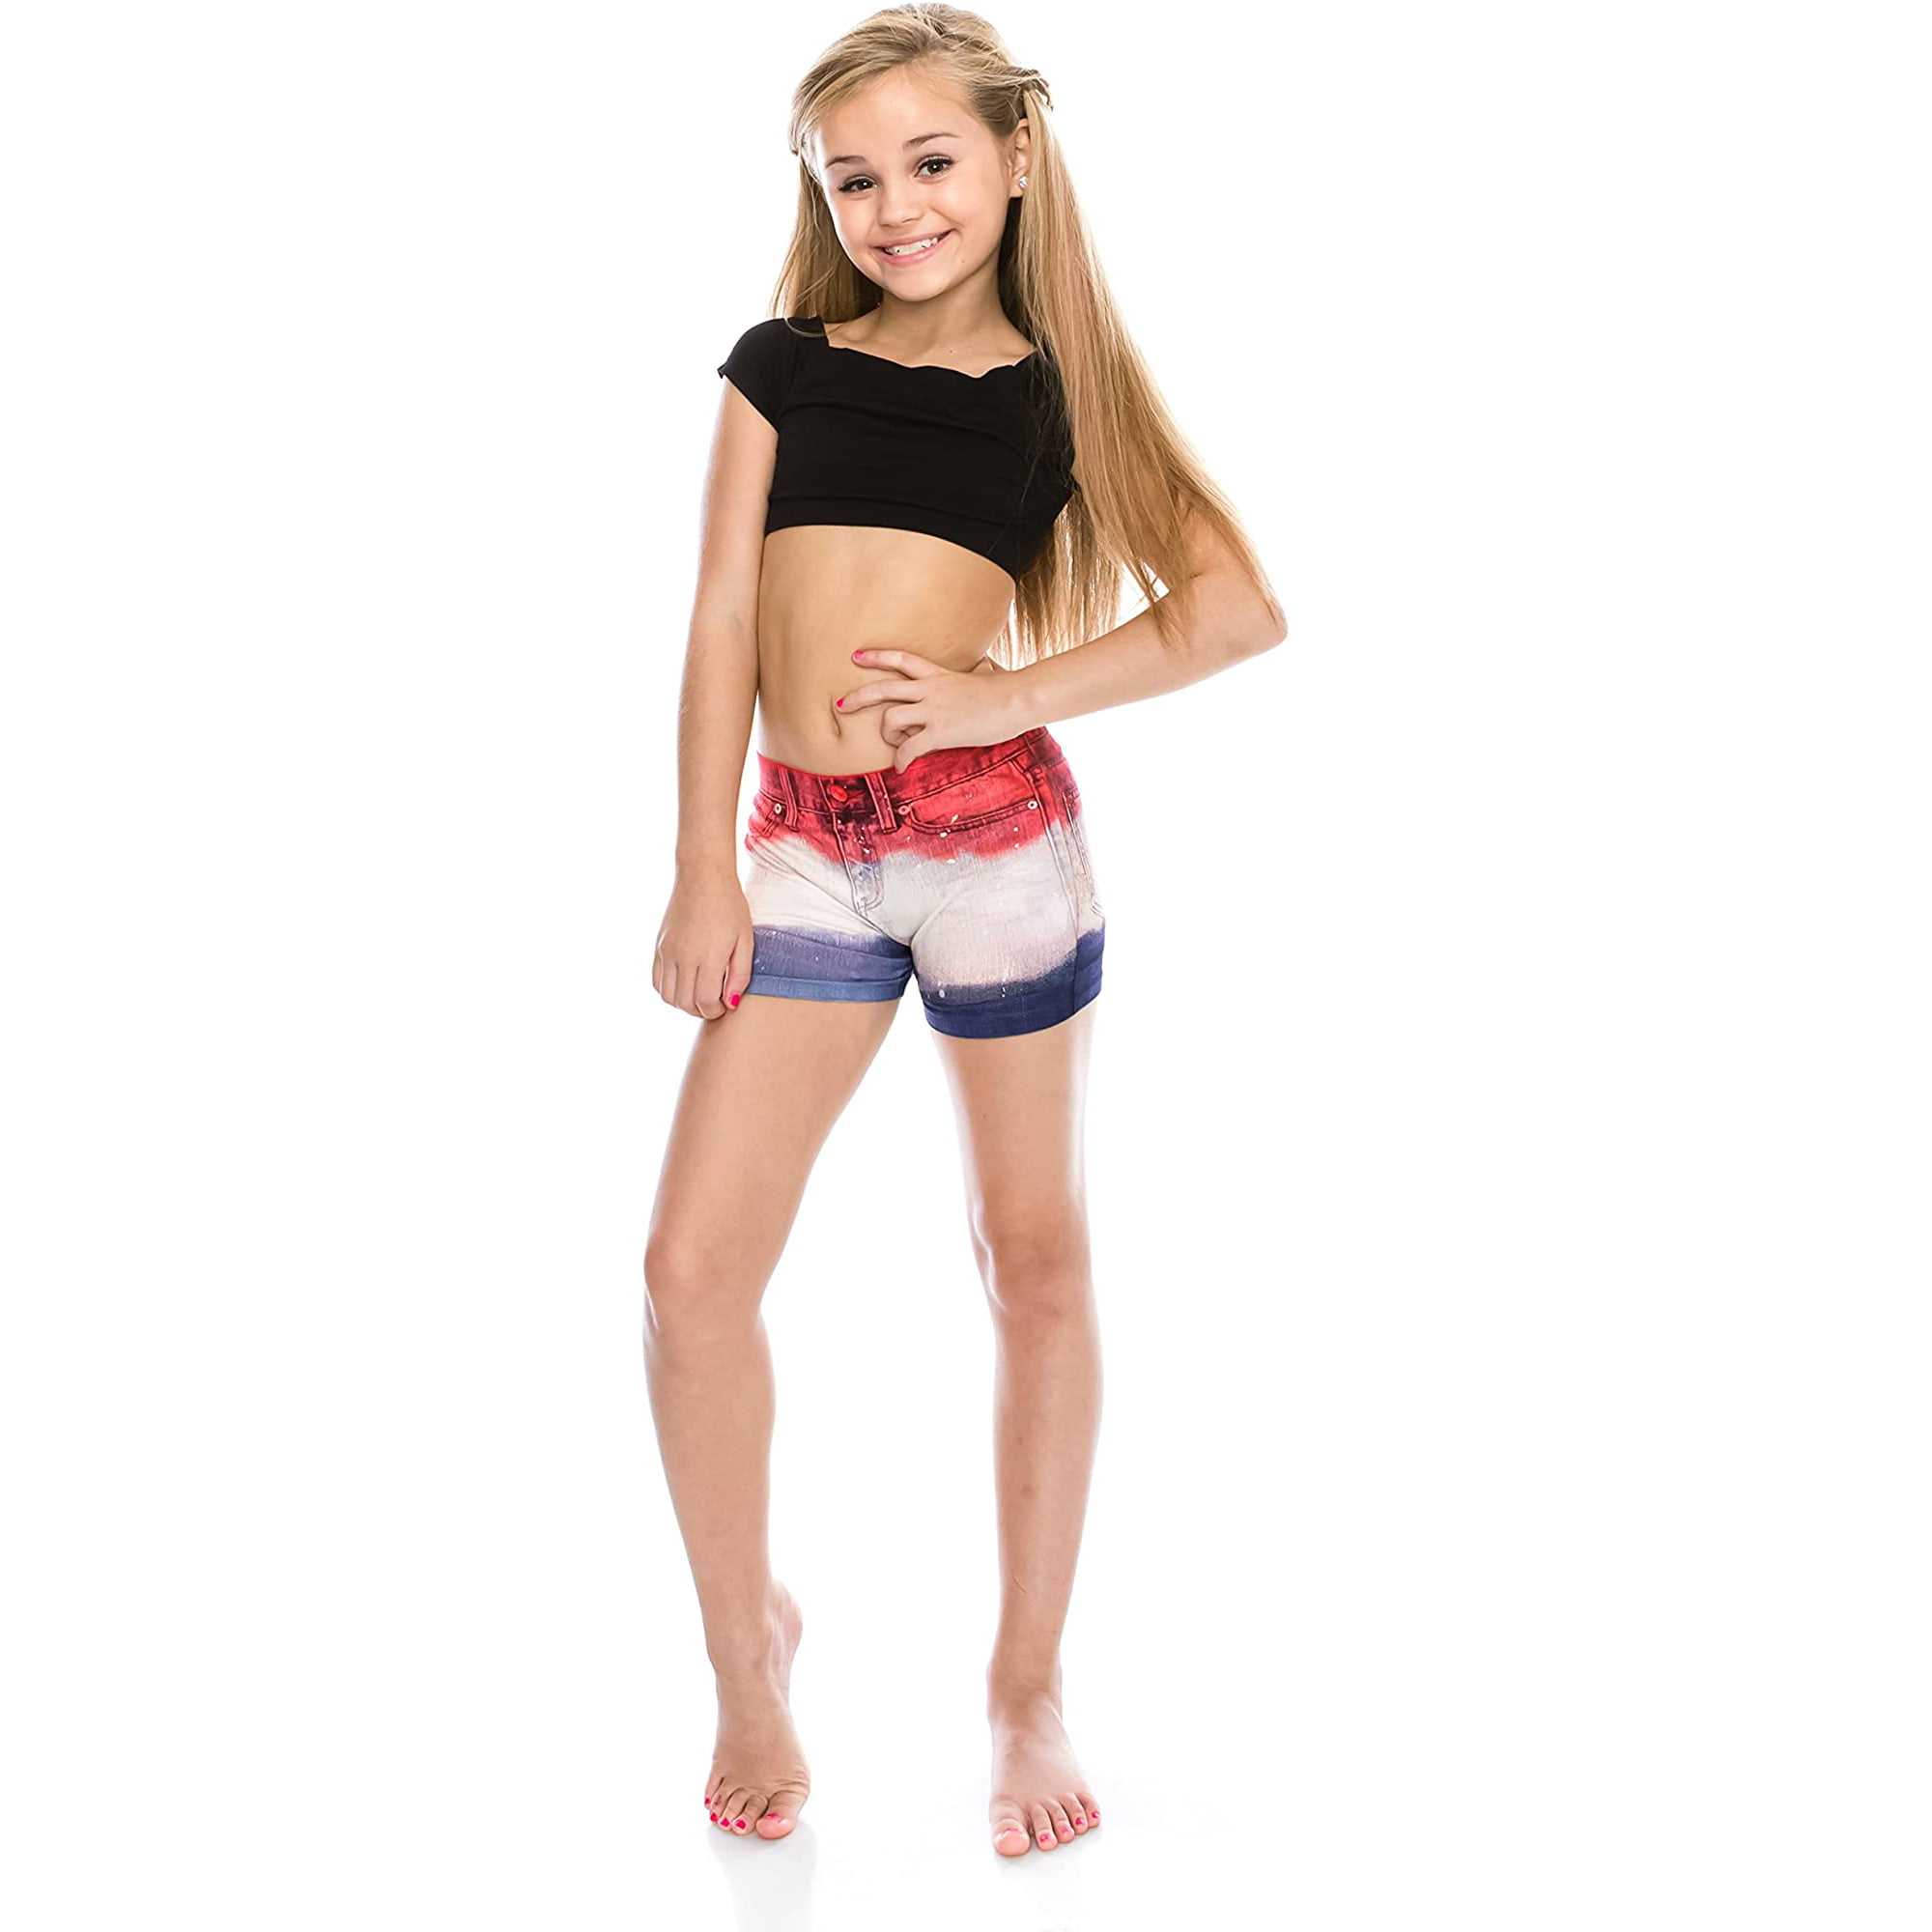 Kurve Kids 2-Piece Dance Outfit - in USA | Walmart